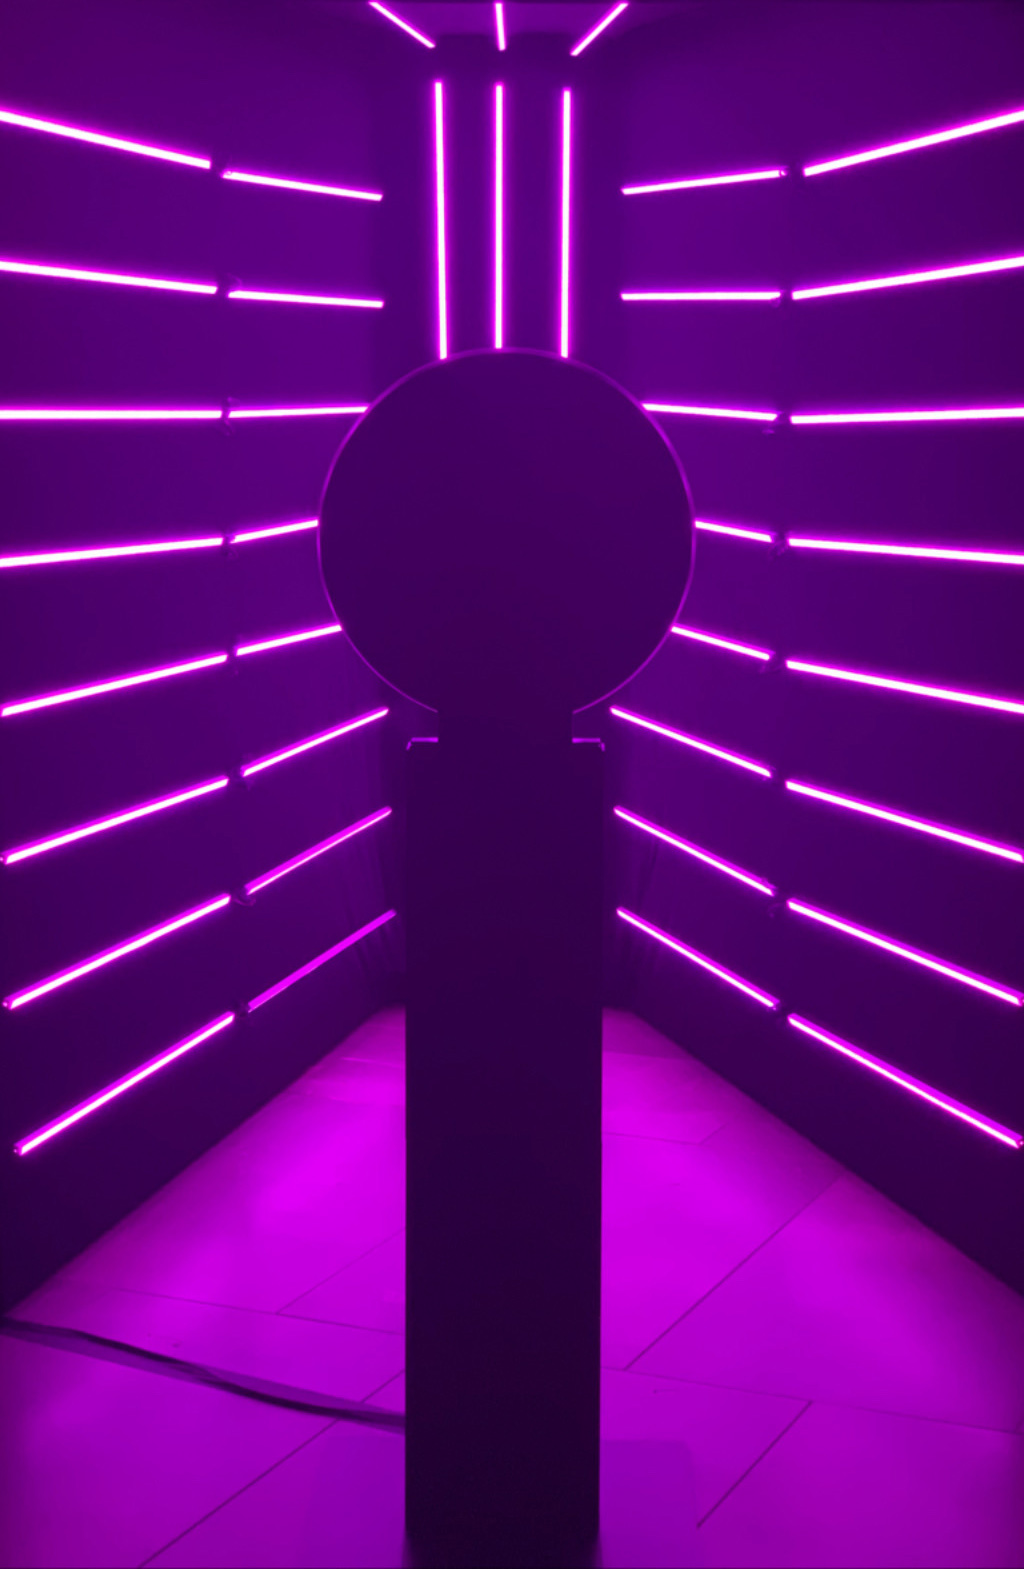 purple | Photo Booth Rentals in Las Vegas, Smash Booth